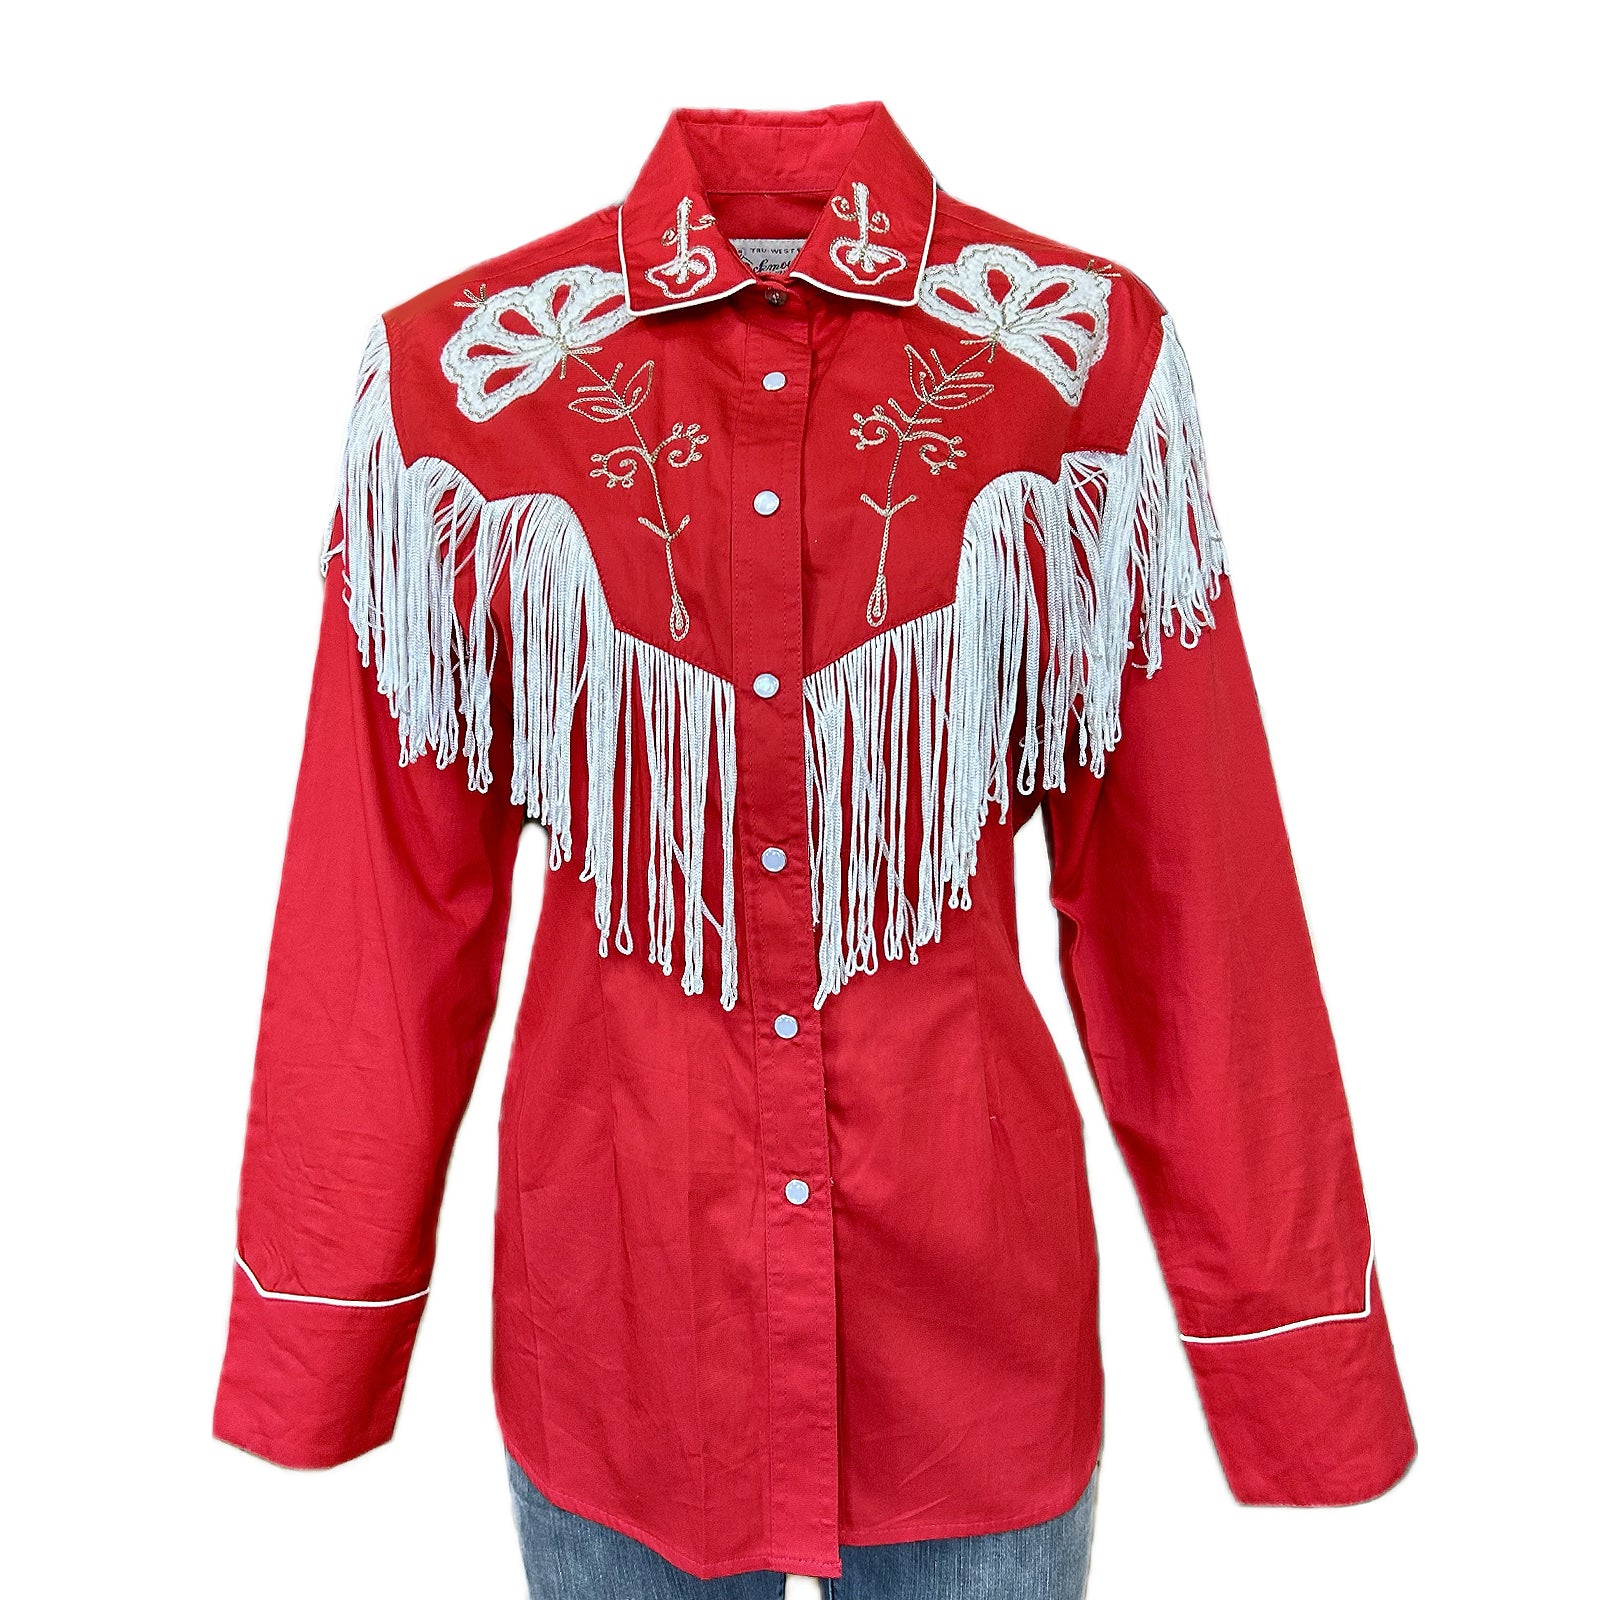 Women's Vintage Fringe Red Embroidered Western Shirt - S